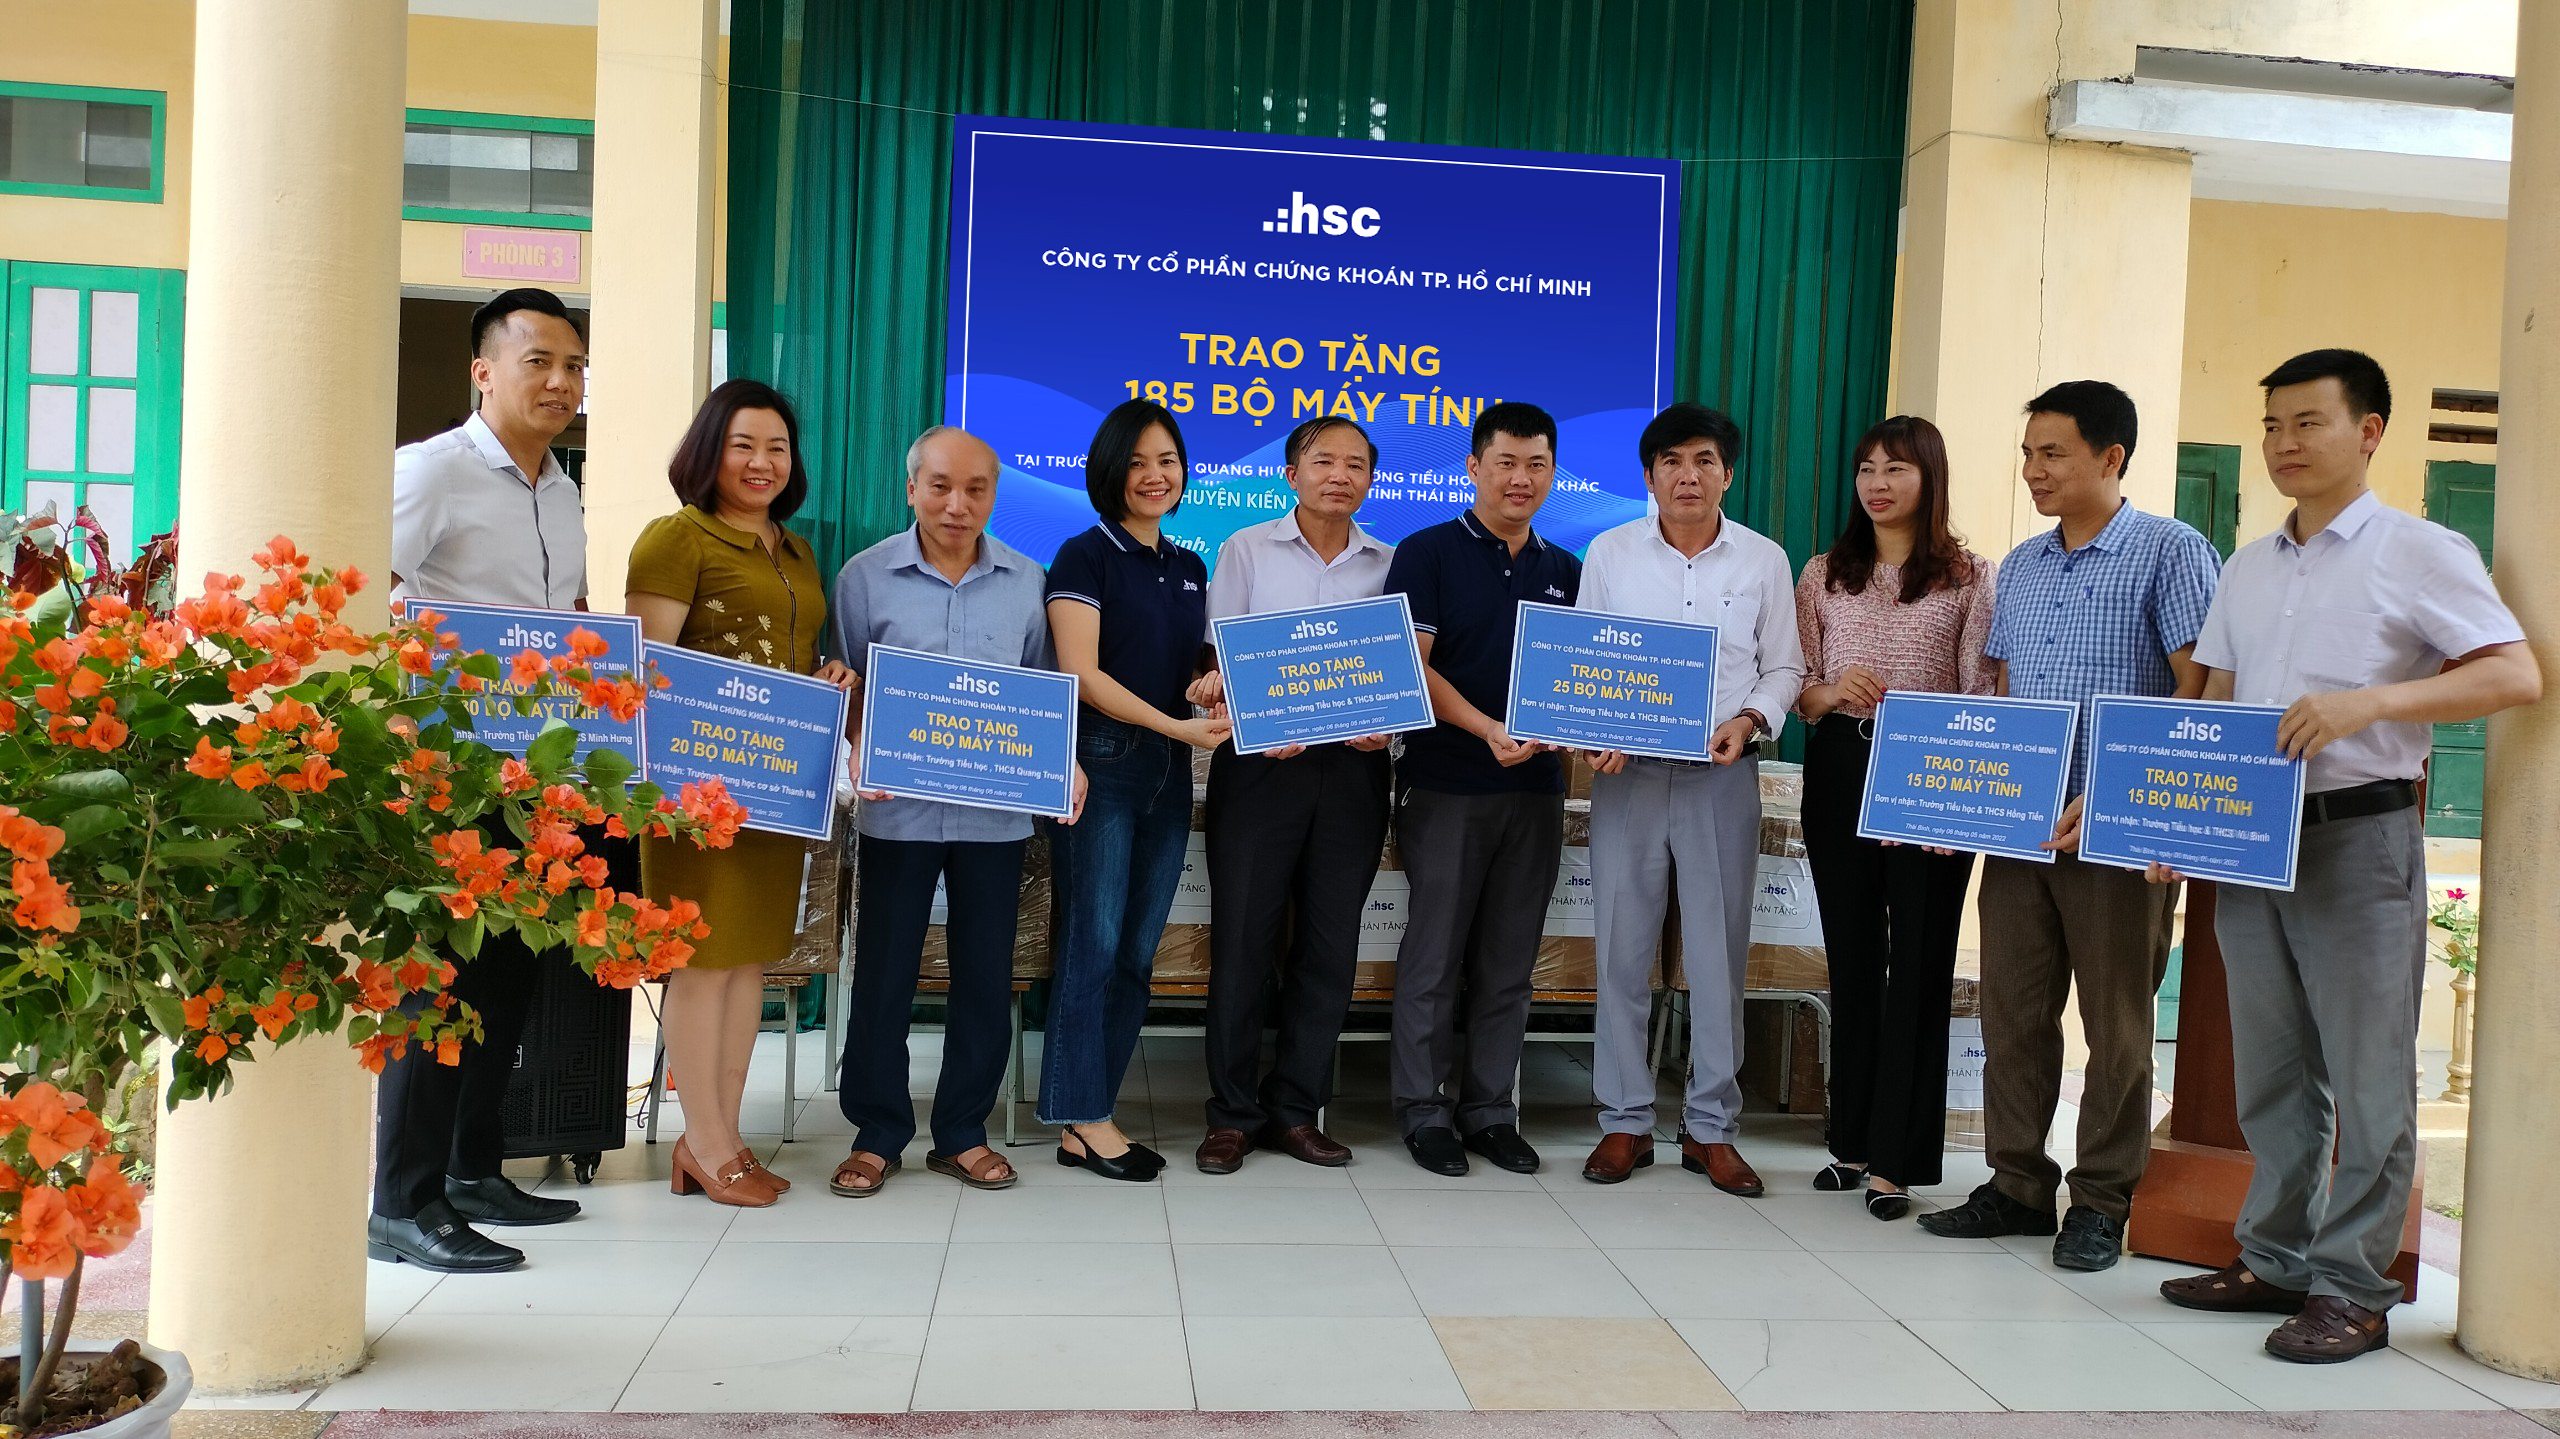 HSC donated 185 computers to schools in Kien Xuong, Thai Binh